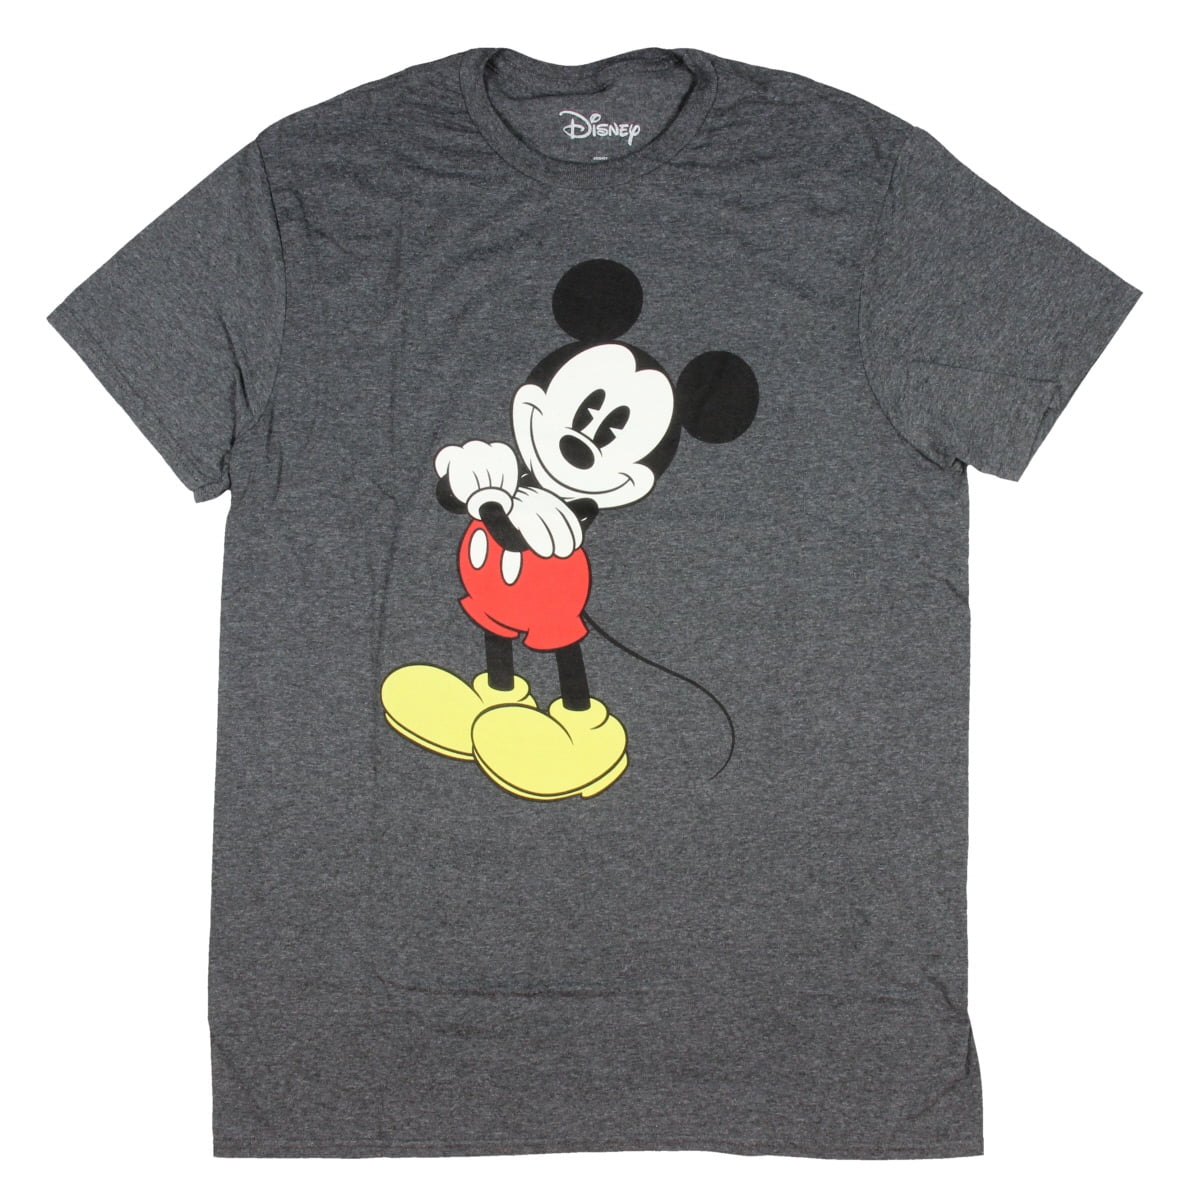 Disney Disney Mickey Mouse Vintage Licensed Men’s T